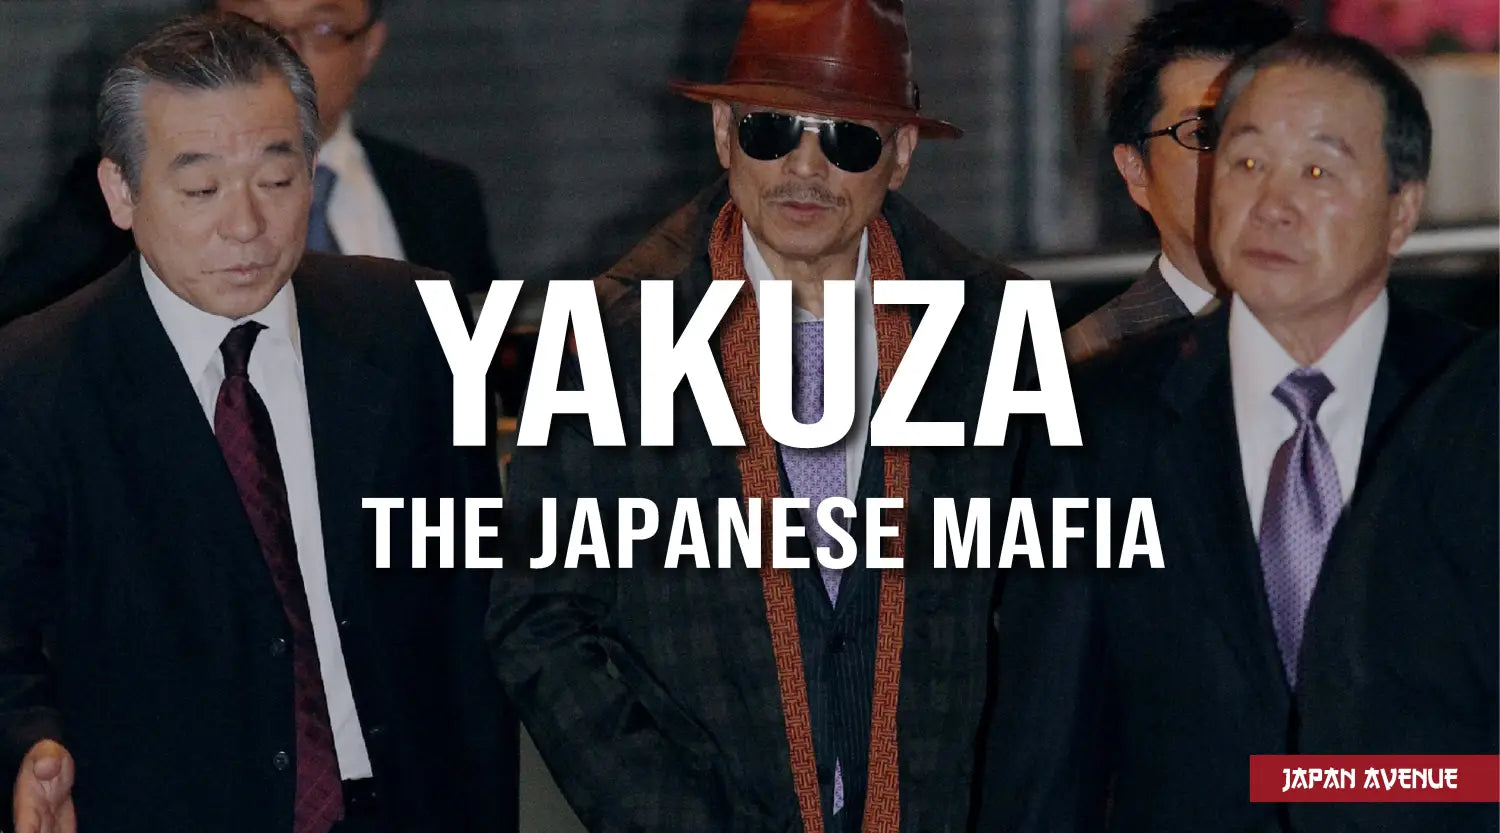 A Look Inside The Japanese Mafia: The Yakuza - Jetset Times